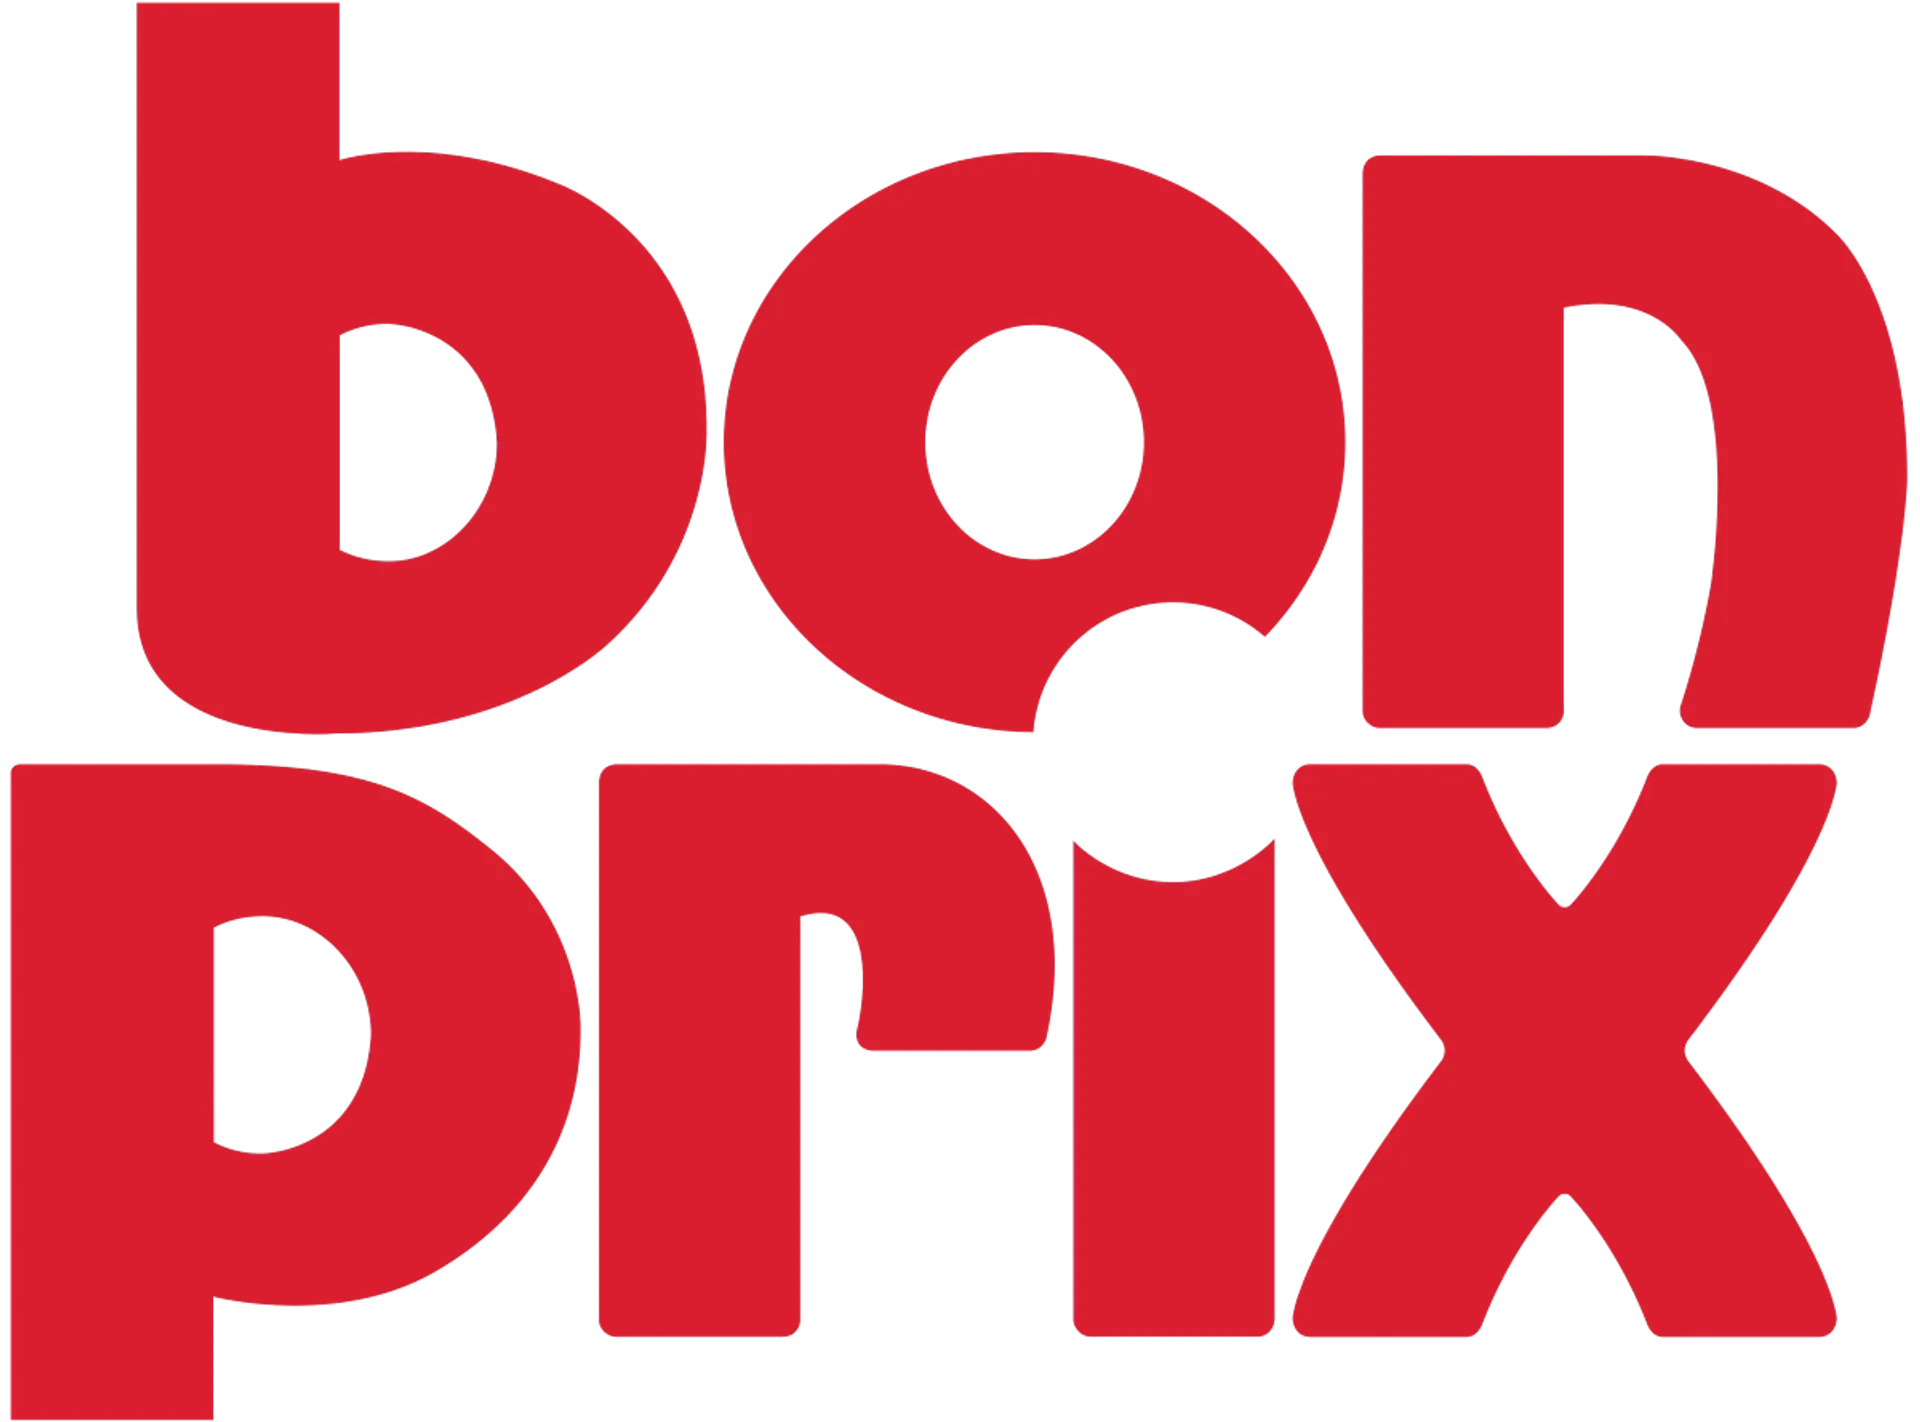 BONPRIX logo